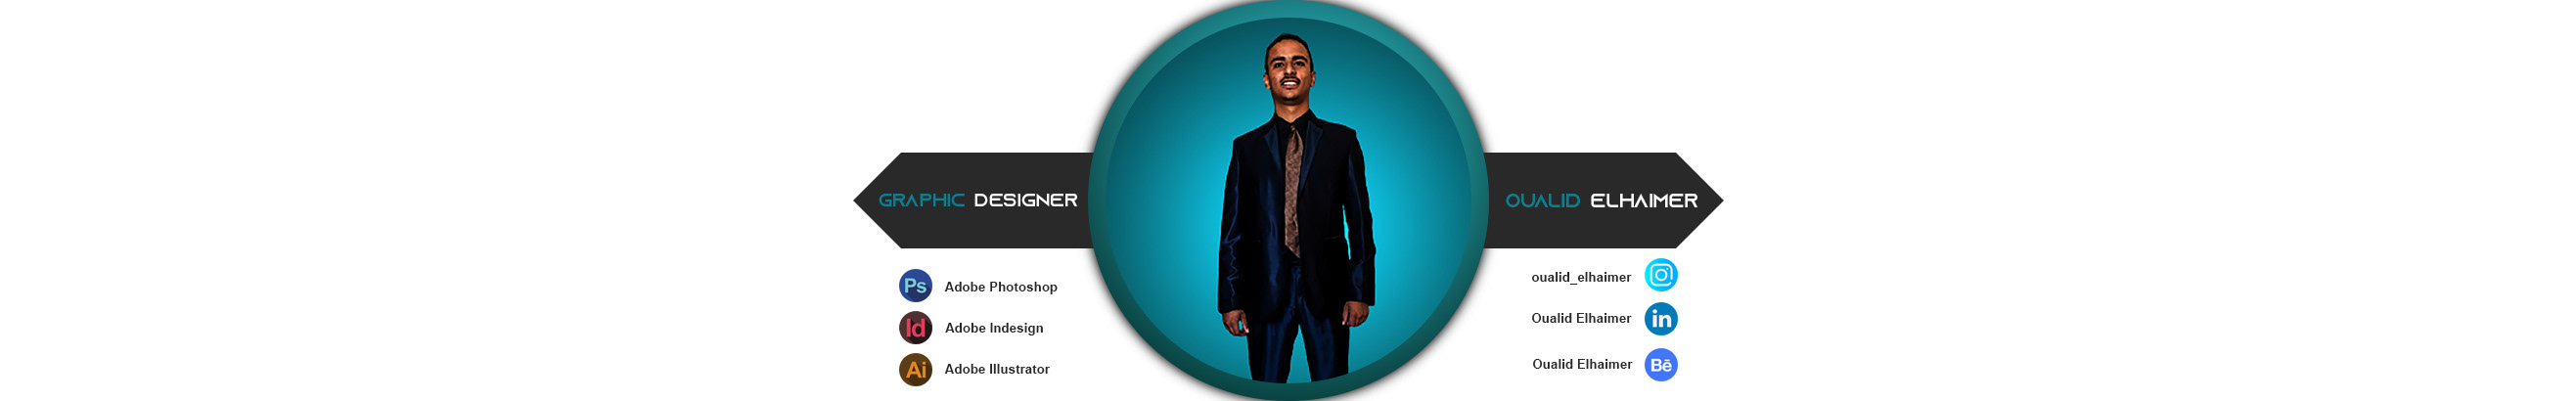 Oualid Elhaimer's profile banner